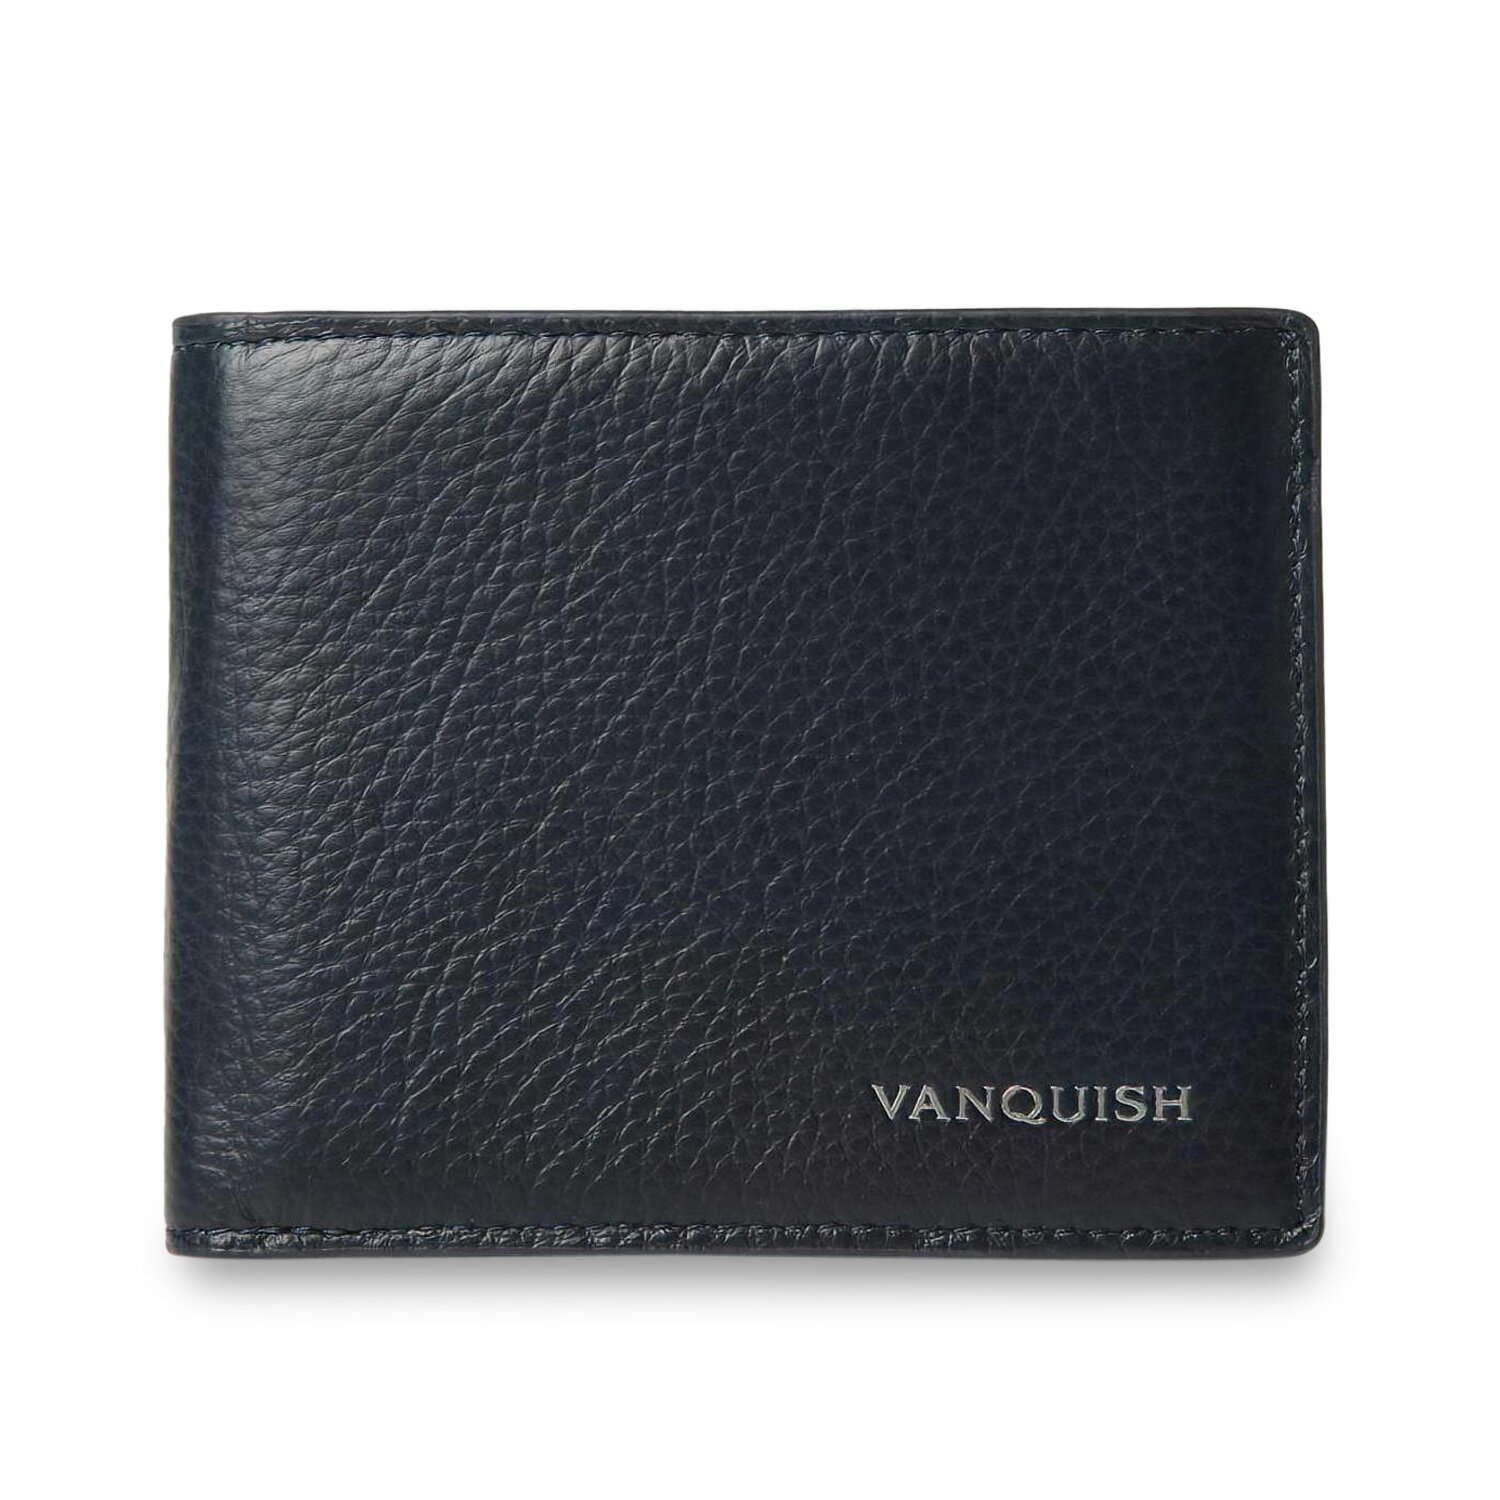 VANQUISH WALLET ヴァンキッシュ 二つ折り財布 メンズ 本革 ブラック ネイビー ダーク グリーン 黒 43520